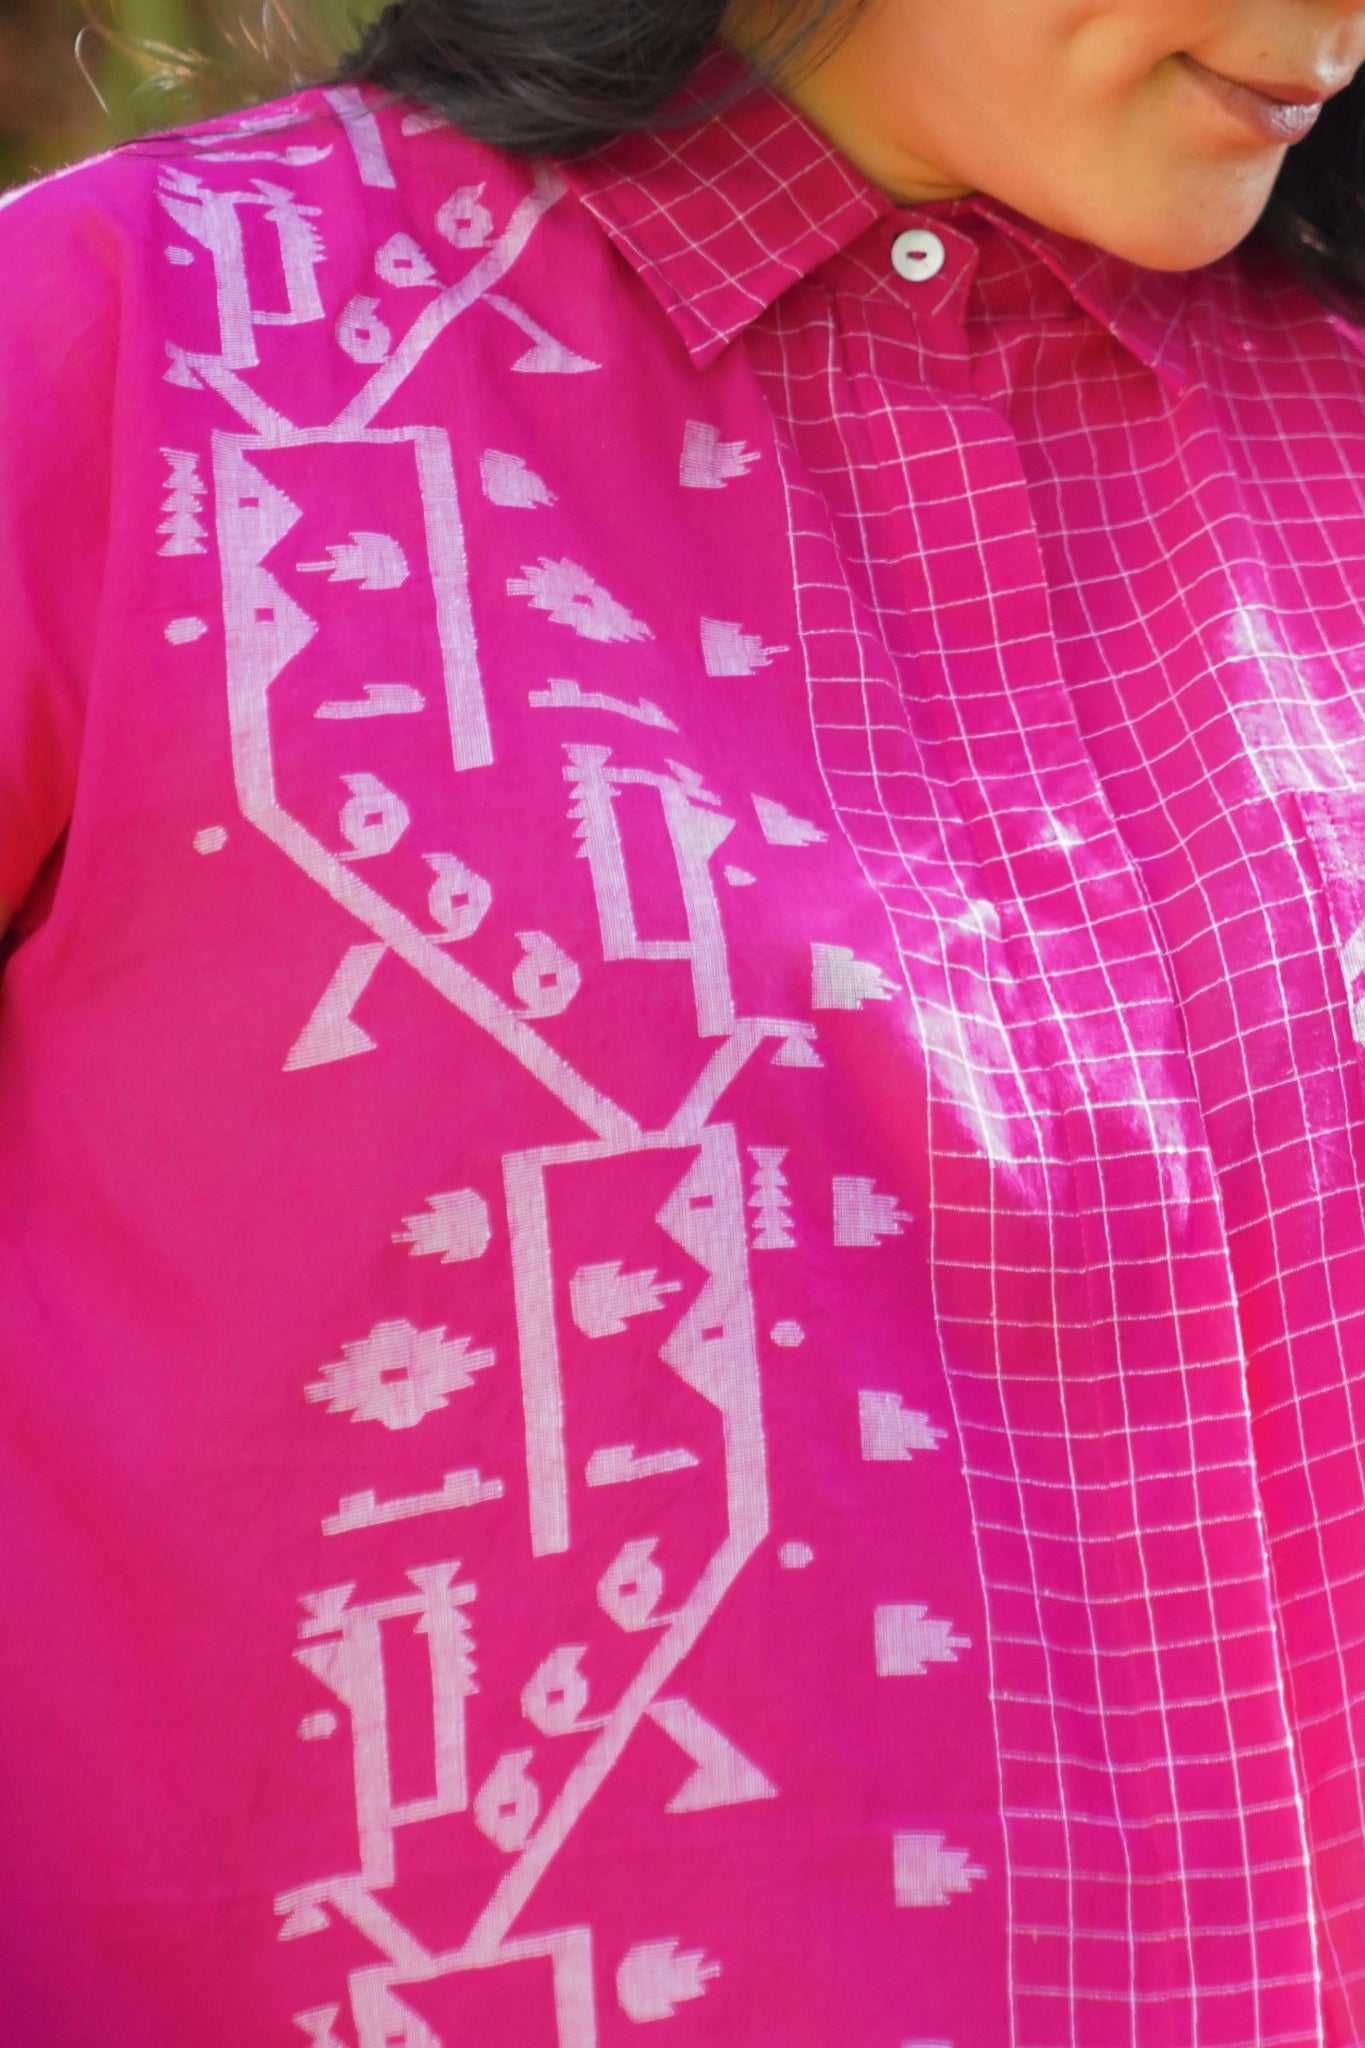 London Bright Pink Crop Top with Collar, Jamdani Checks and Motifs - Detail